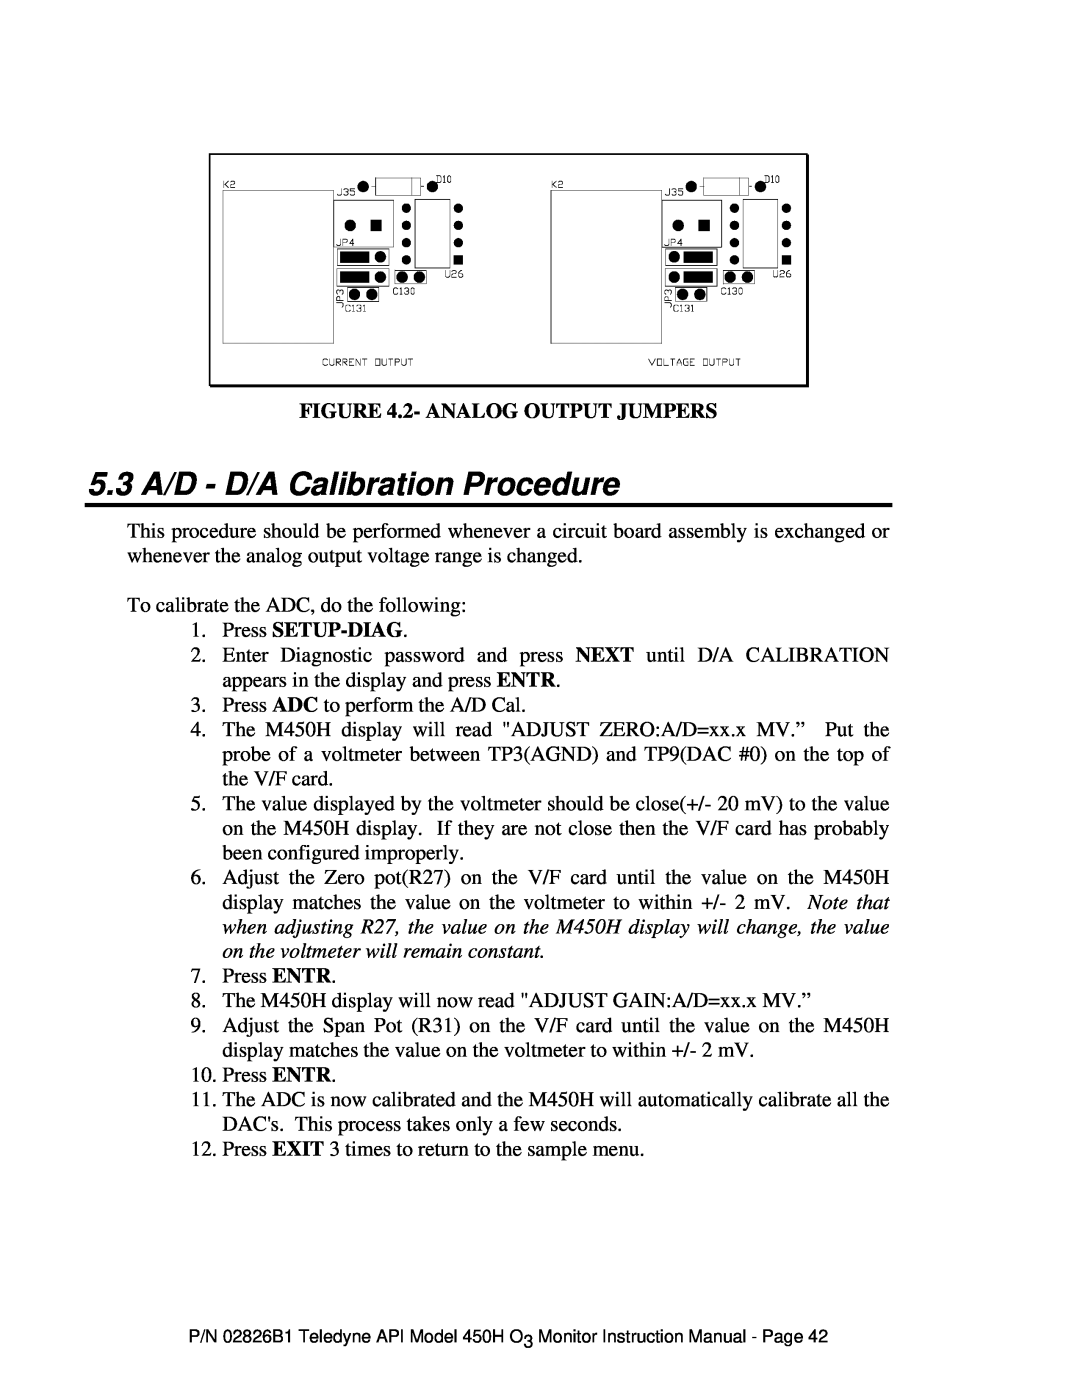 Teledyne 450H instruction manual 5.3 A/D - D/A Calibration Procedure, 2- ANALOG OUTPUT JUMPERS, Press SETUP-DIAG 